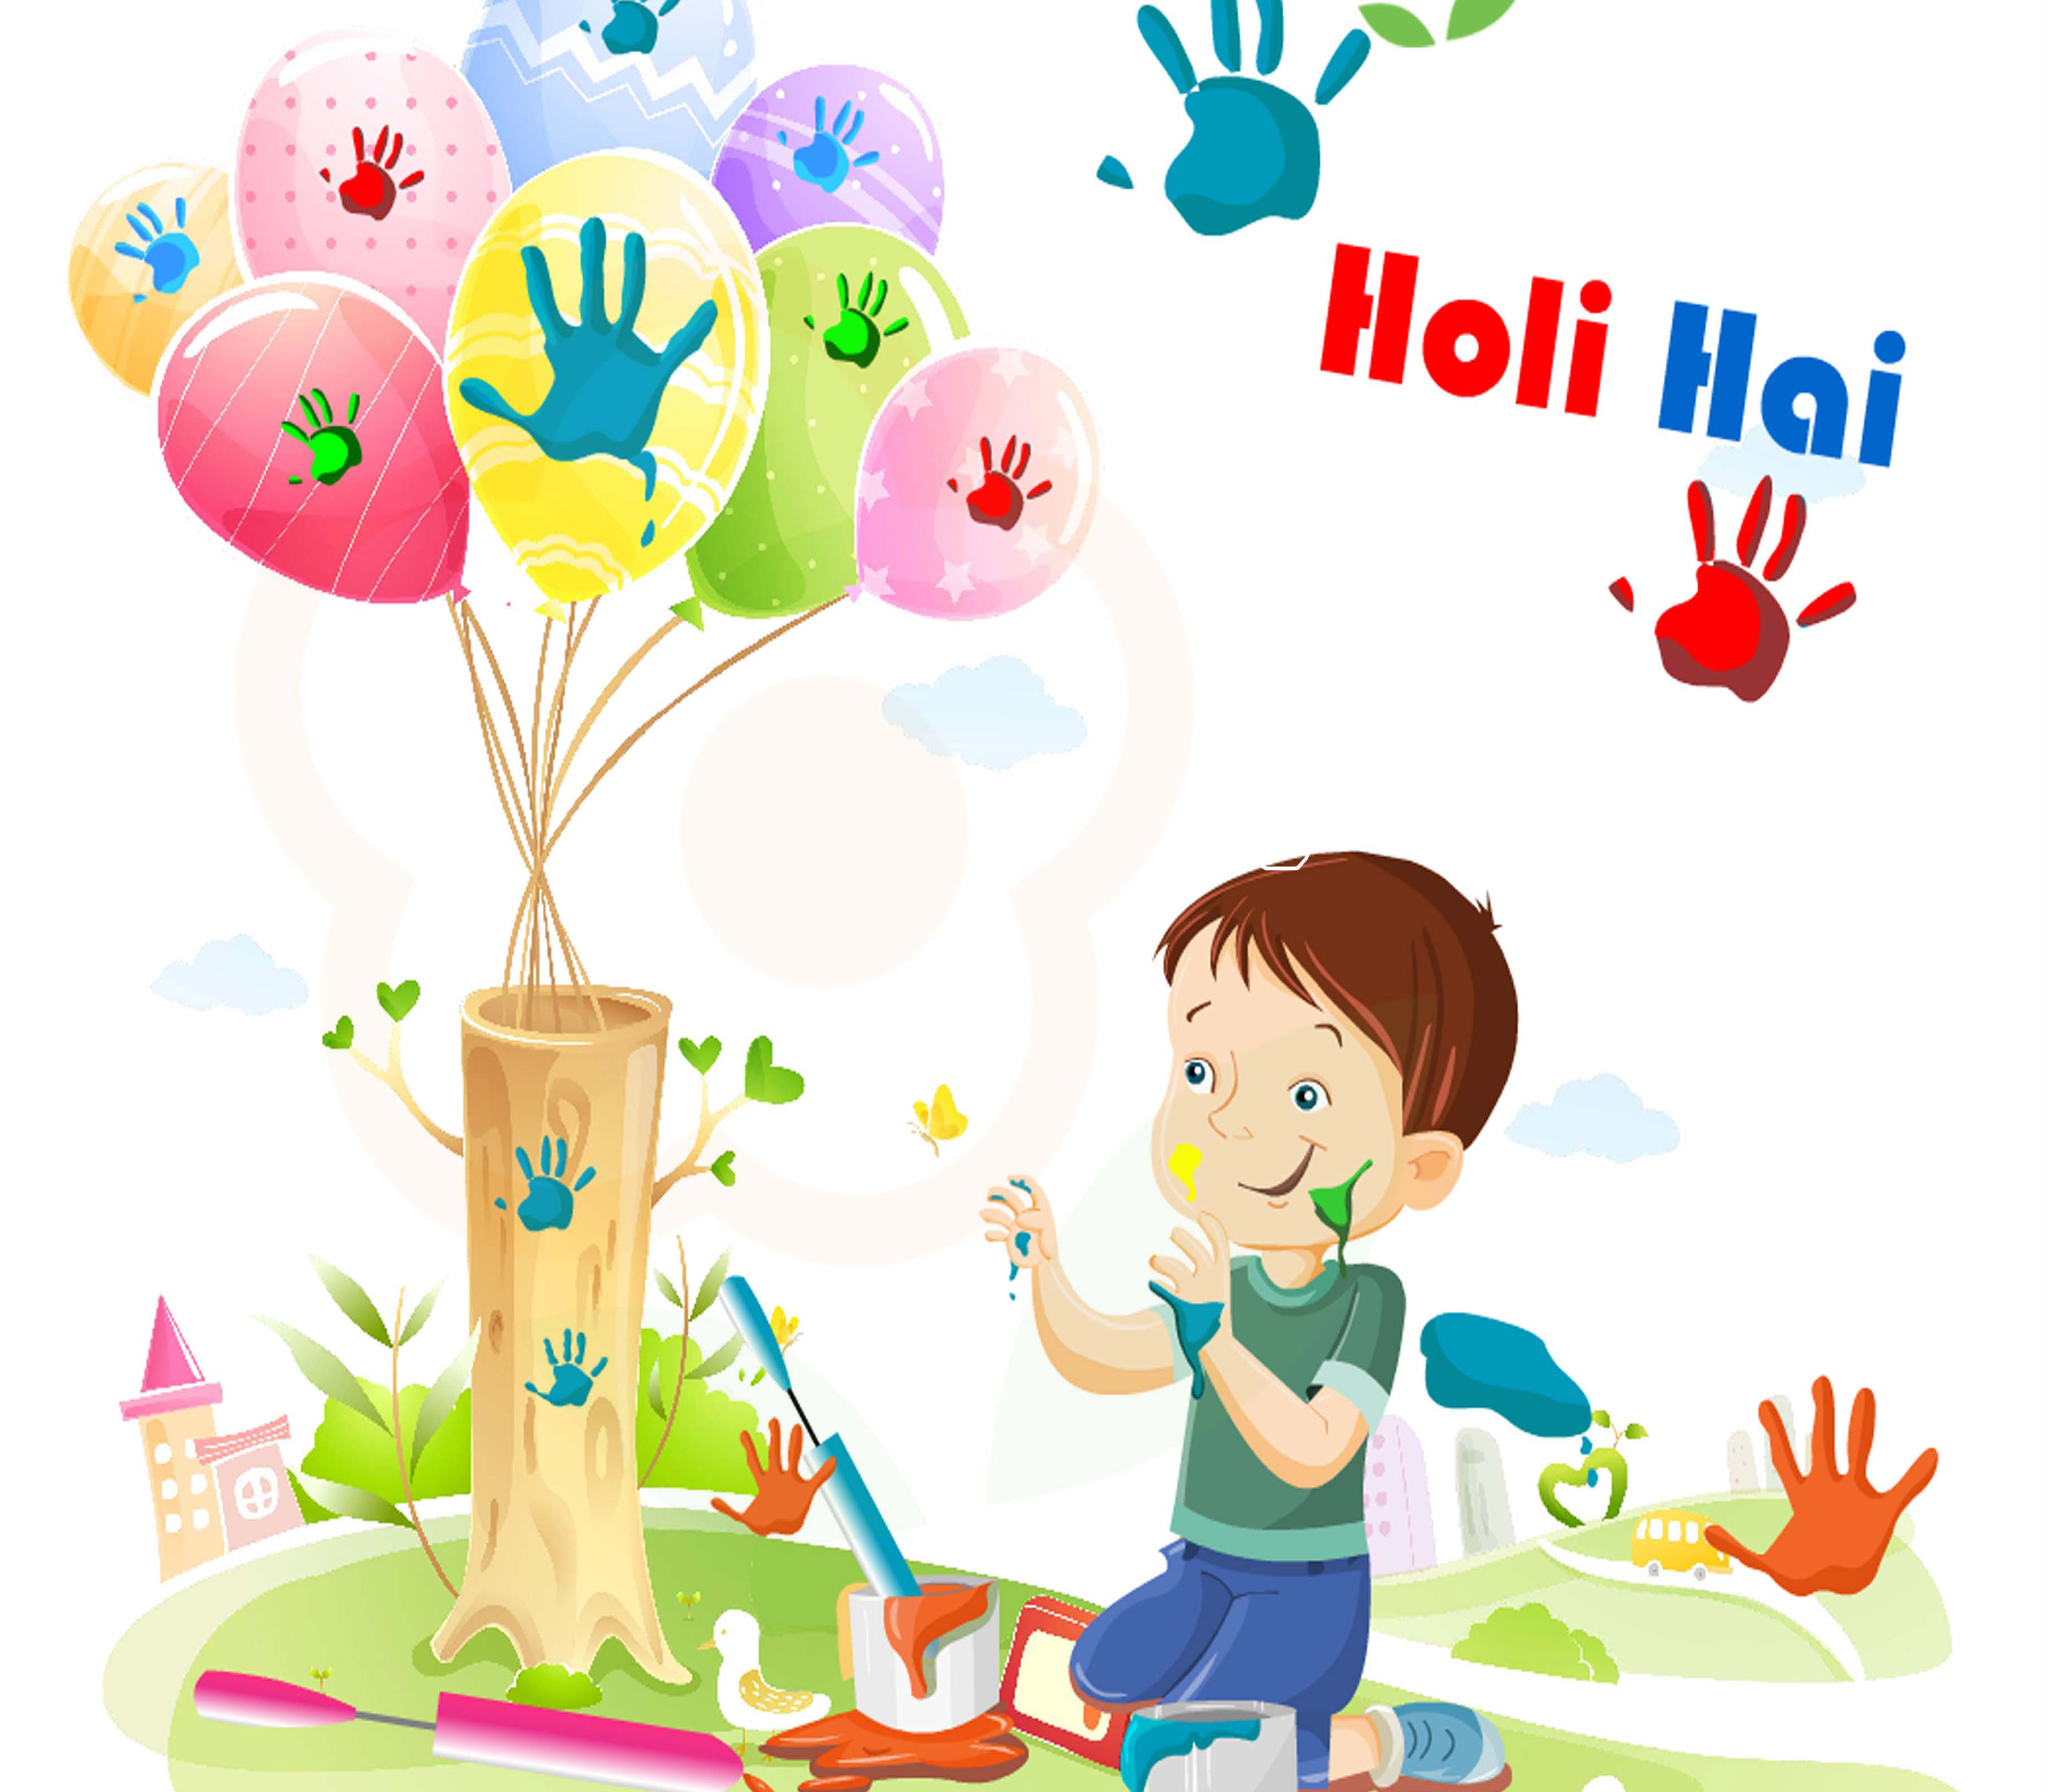 holi hai cartoon child hd images | Free wallpapers